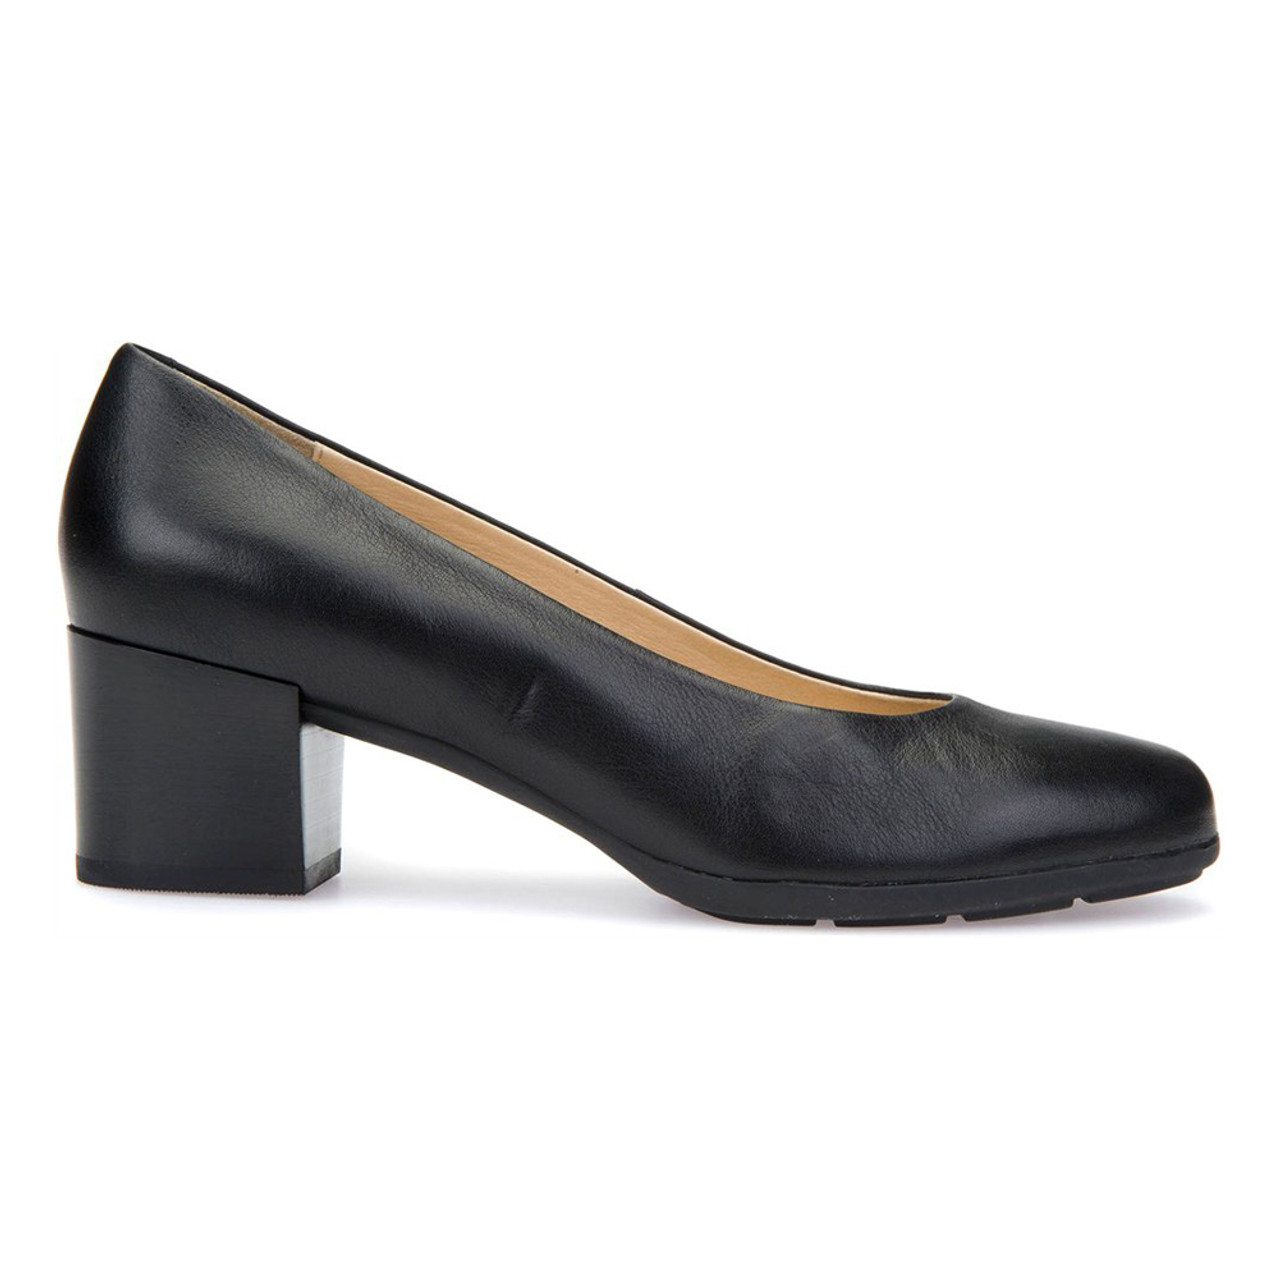 Geox Women's Annya Dress Shoe - Black | Discount Geox Ladies Shoes & More -  Shoolu.com | Shoolu.com